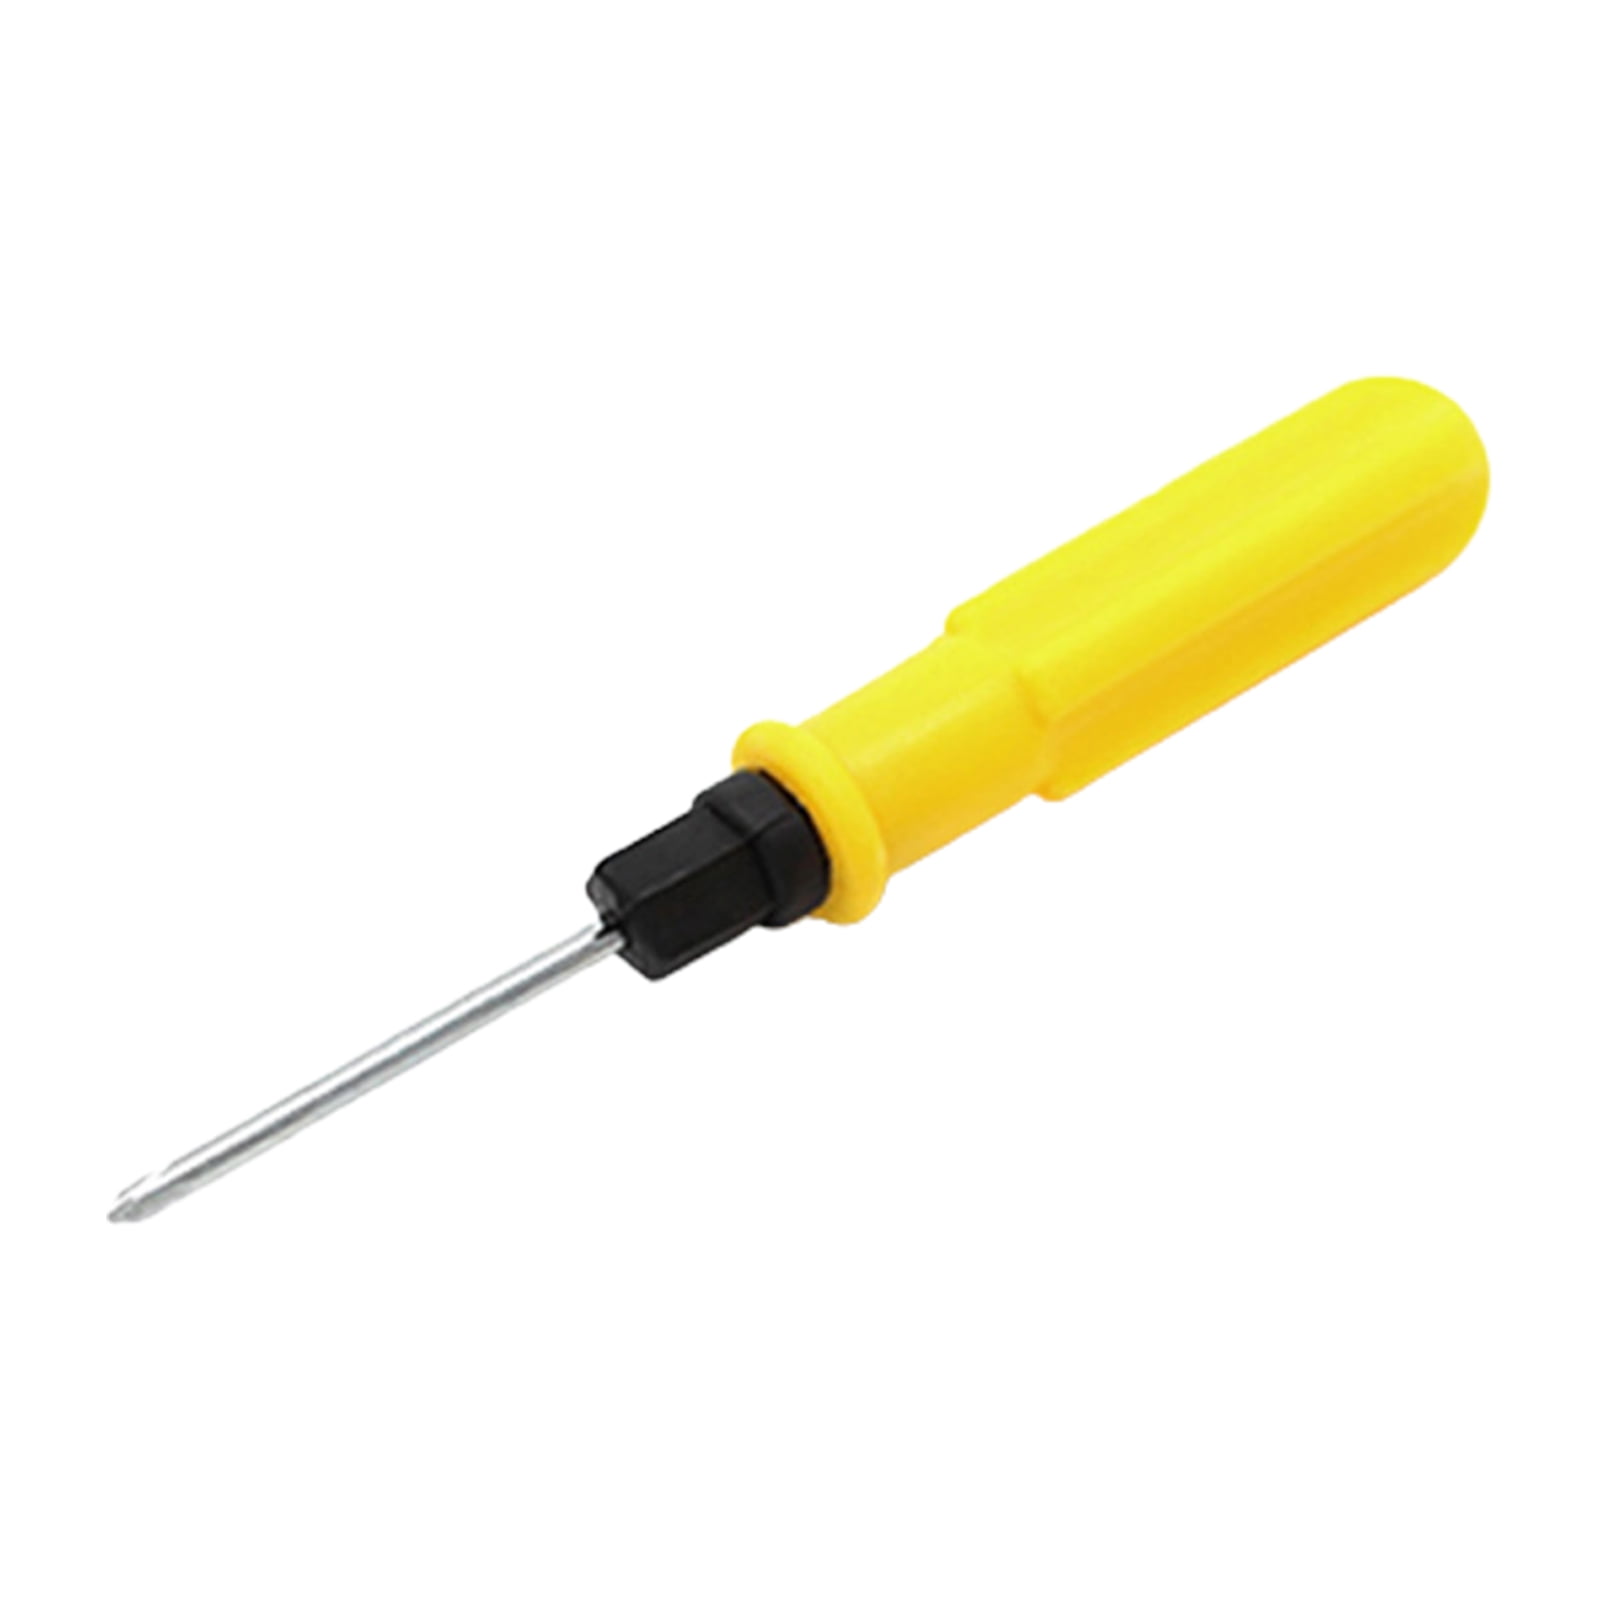 8x Small Precision Flat-blade/Cross Screwdriver Home Quick Repair ToolsUK 